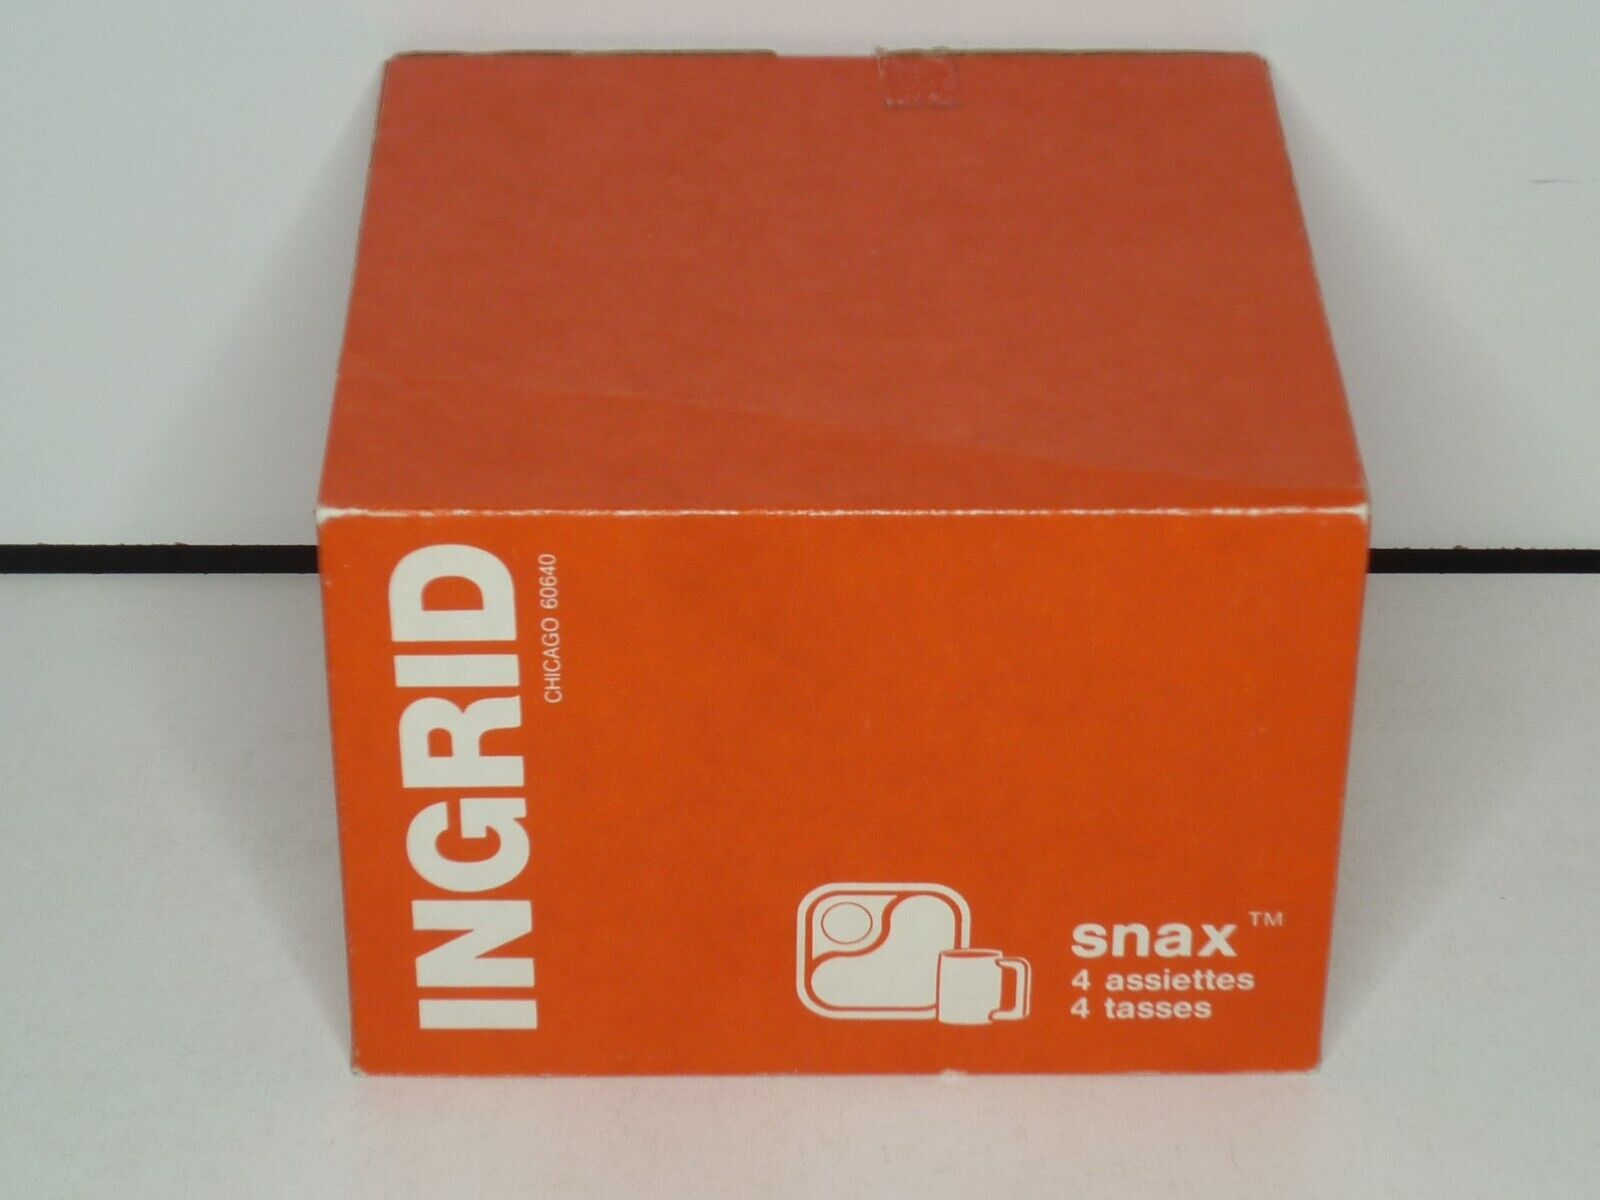 Ingrid LTD Chicago 60640 Snax 4 Sets Plates & Mugs Orange Retro Plastic Box